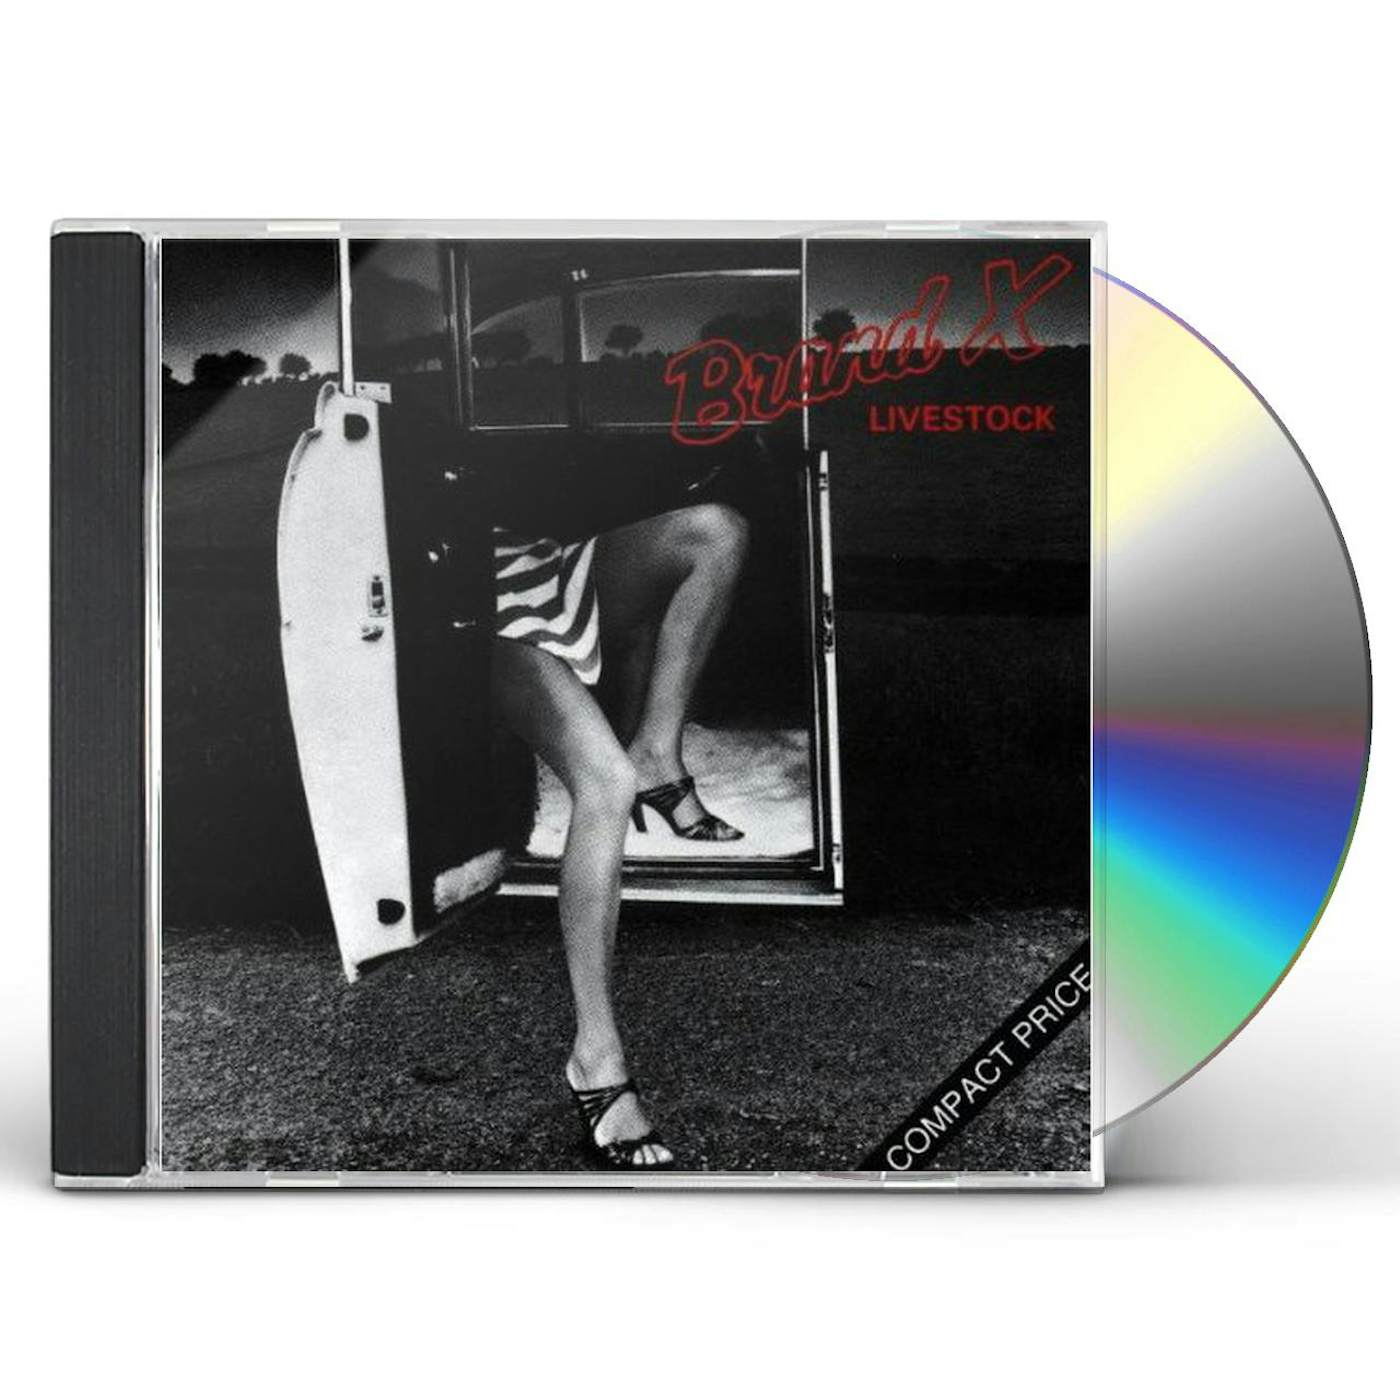 Brand X LIVESTOCK CD